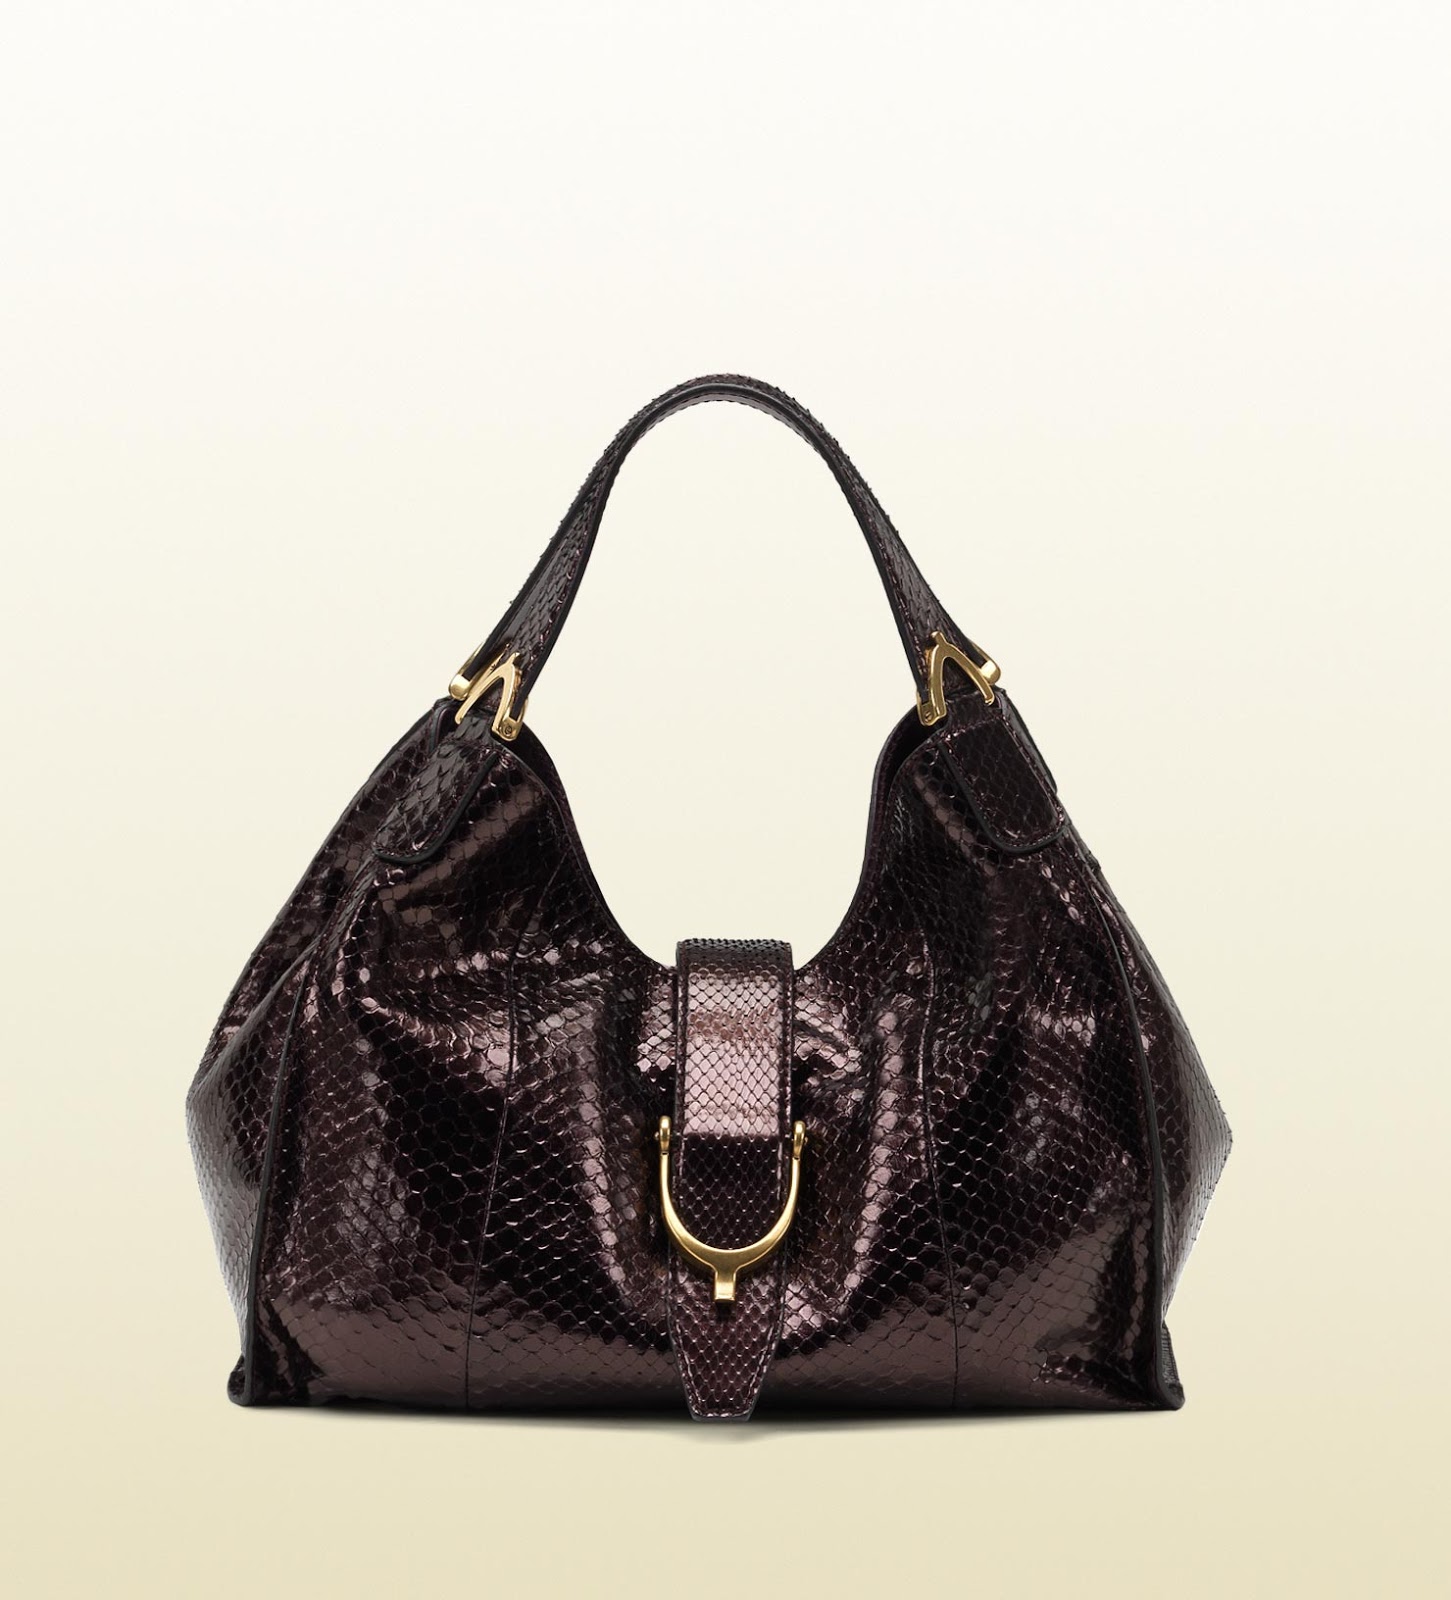 Gucci Handbags For Women HD Wallpaper 2013 | World Of HD Wallpapers